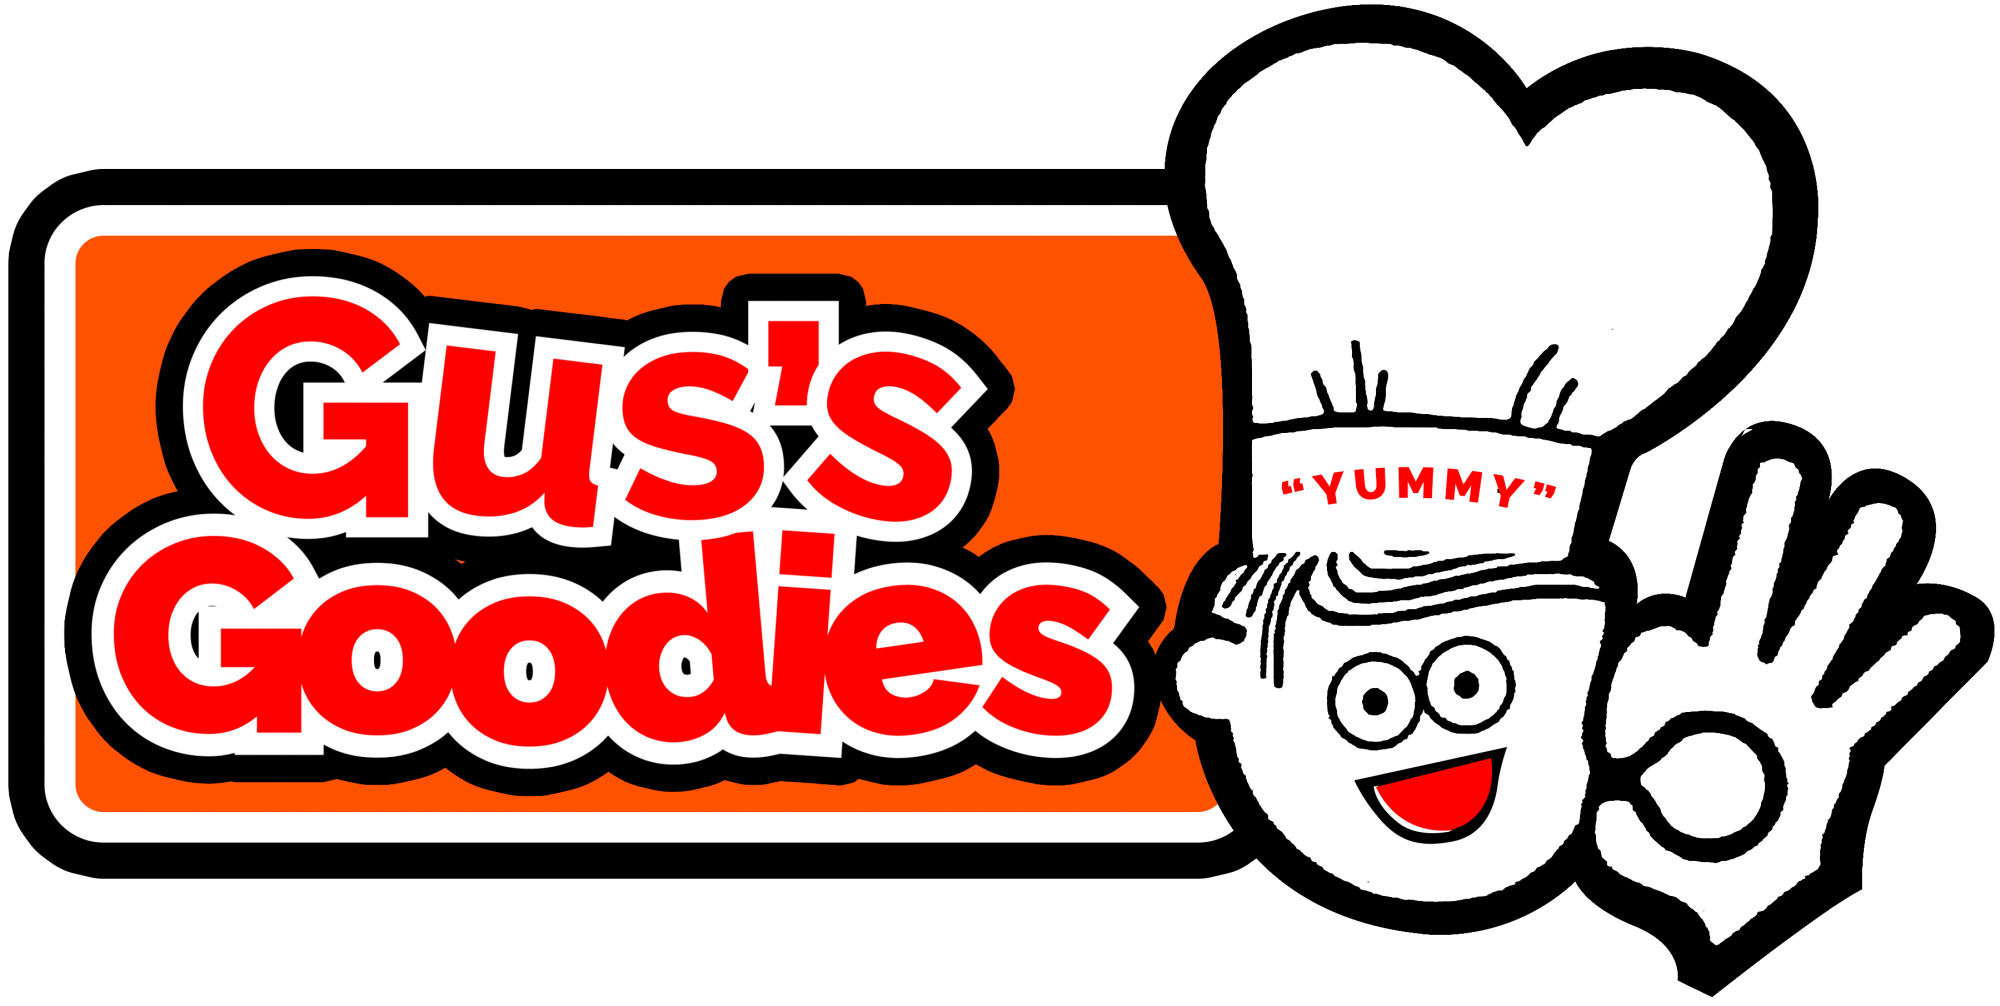 Gus's Goodies